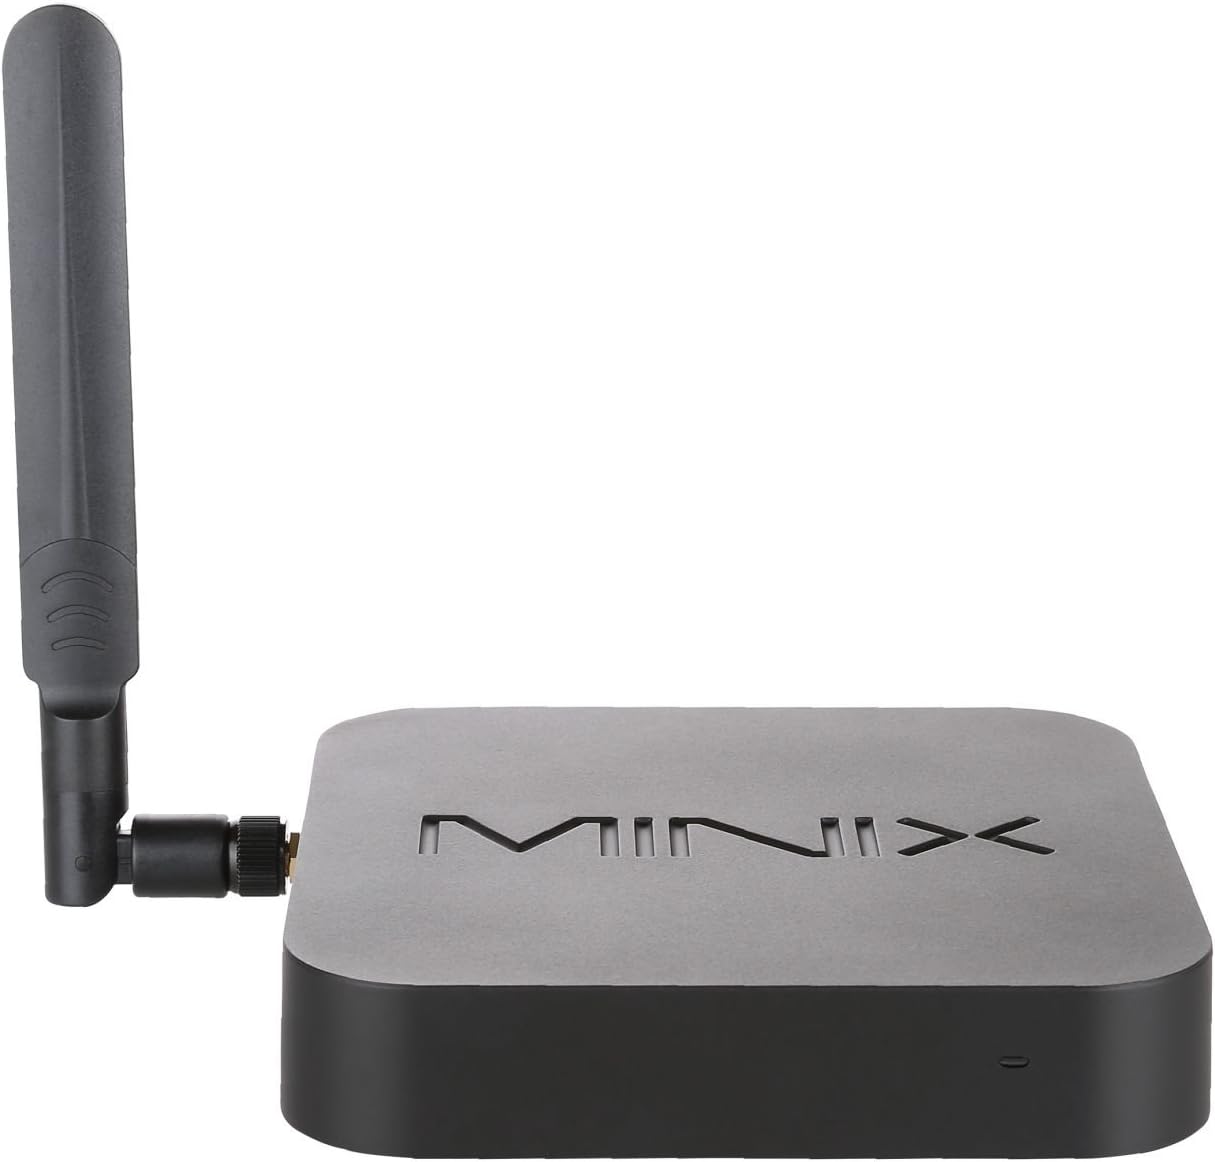 MINIX Neo Z83-4 Plus, 4G/64G Intel X5-Z8350 Fanless Mini PC Windows 10 Pro. Dual-Band Wi-Fi/Gigabit Ethernet/Mini DP/4K UHD/Auto Power On. Ideal Home/Office/Industrial and Digital Signage Solution